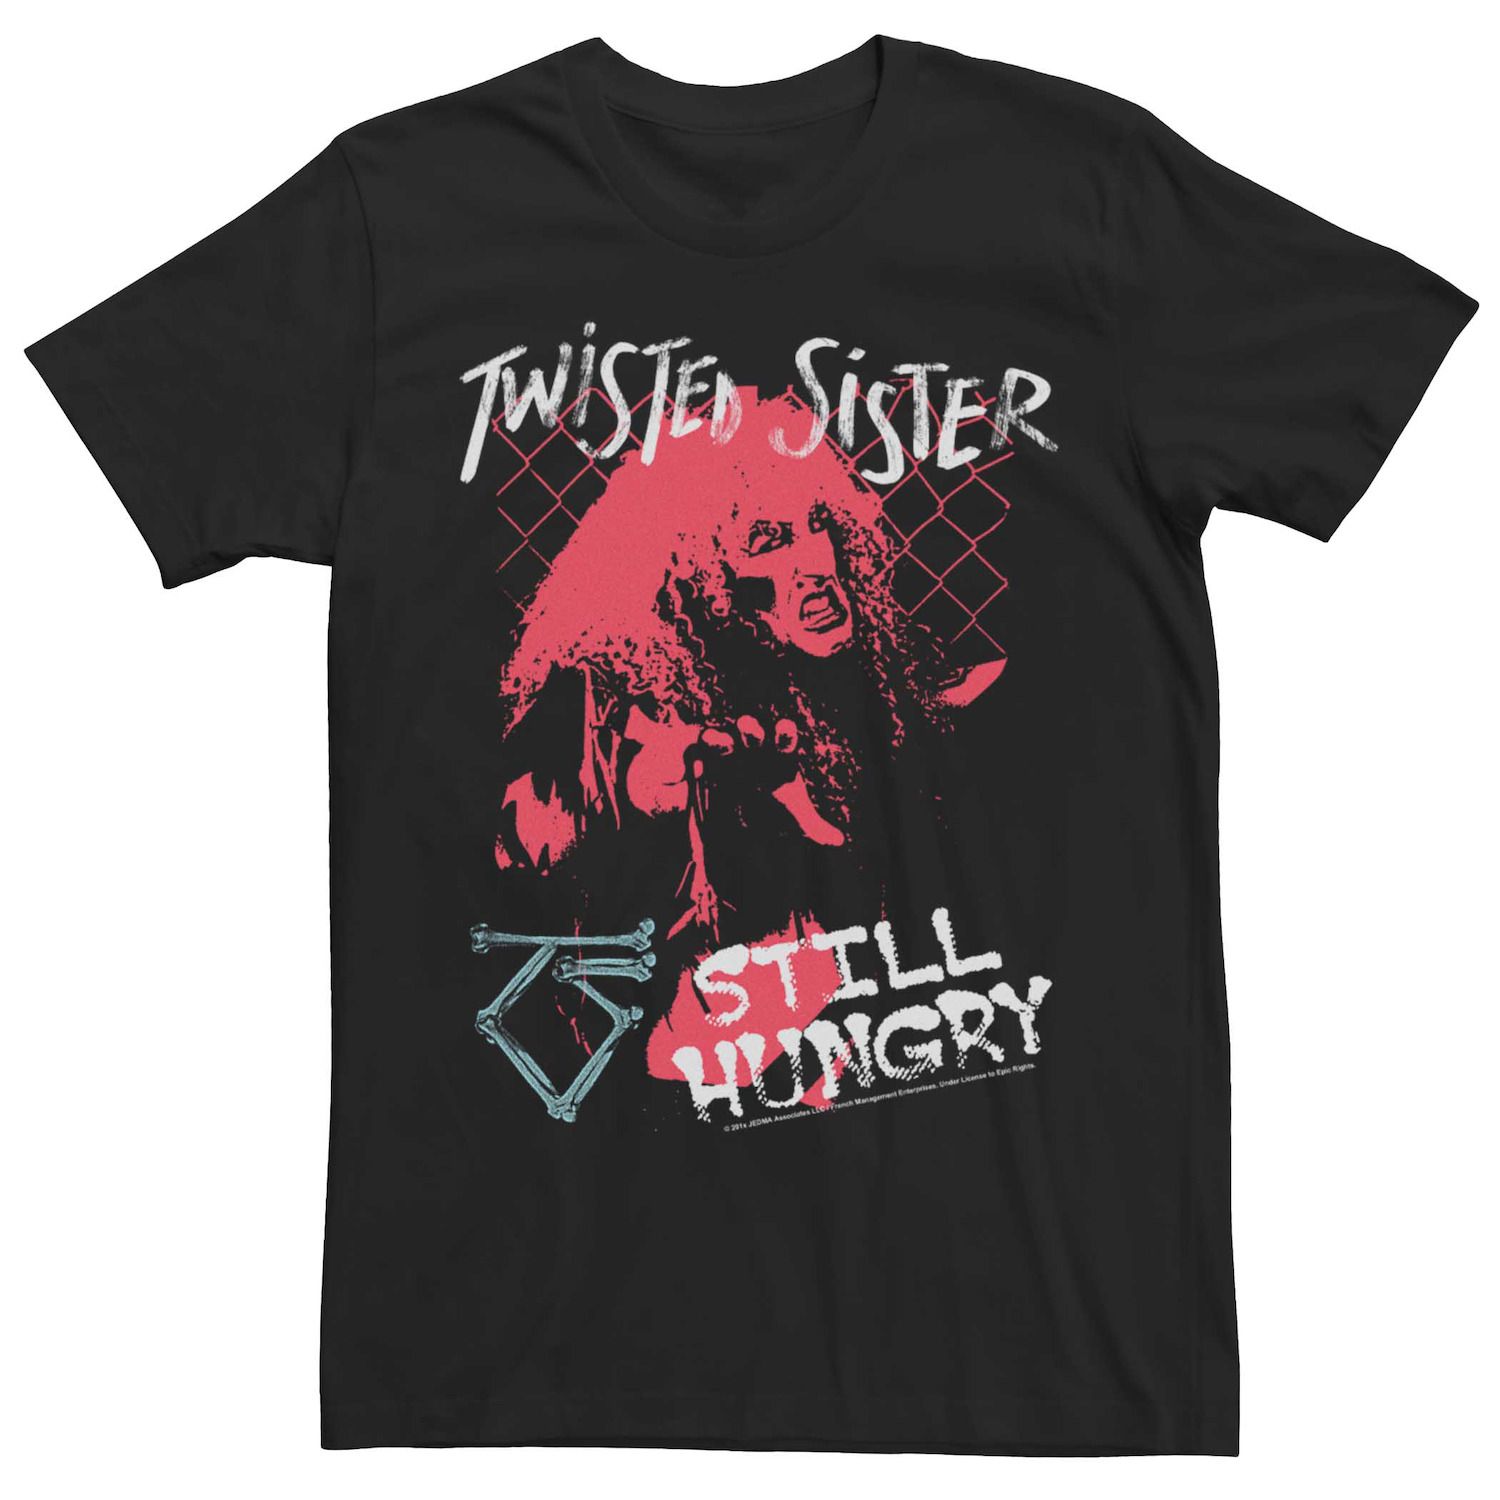 Мужская футболка Twisted Sister Dee Snider Still Hungry красного оттенка с портретом Licensed Character twisted sister stay hungry